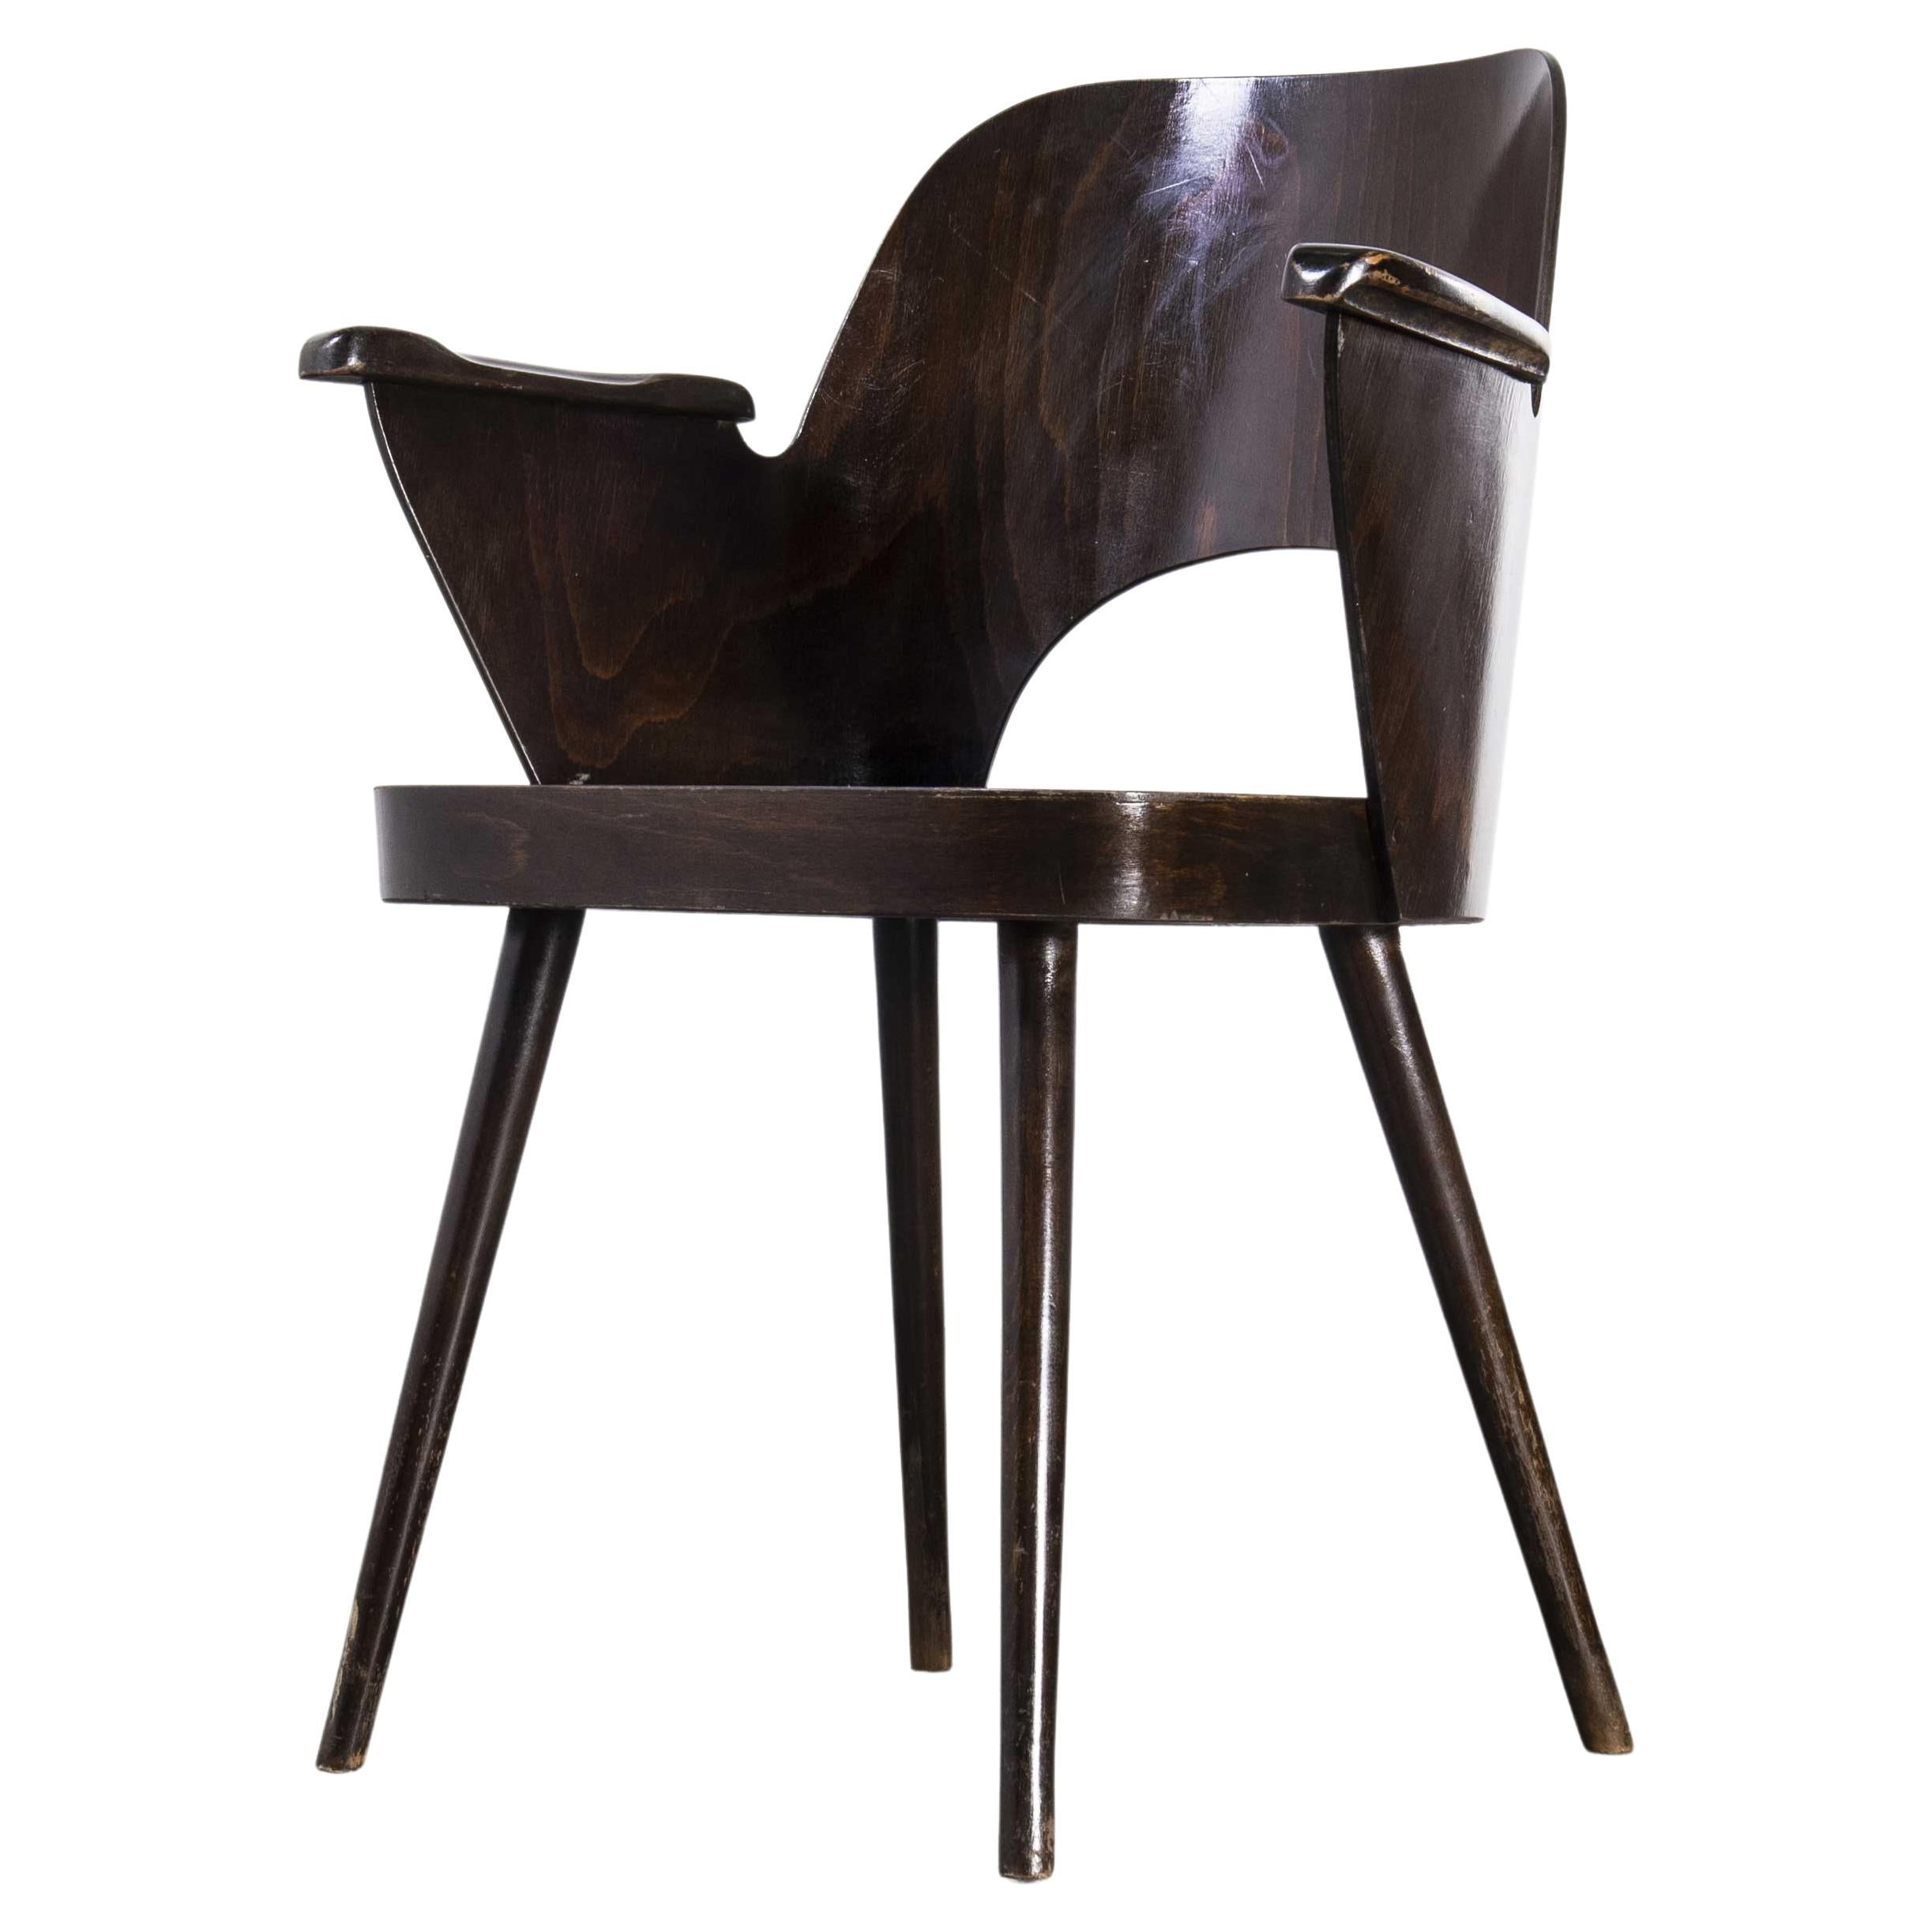 Beistellstuhl aus dunklem Nussbaumholz, Oswald Haerdtl Modell 515, 1950er Jahre